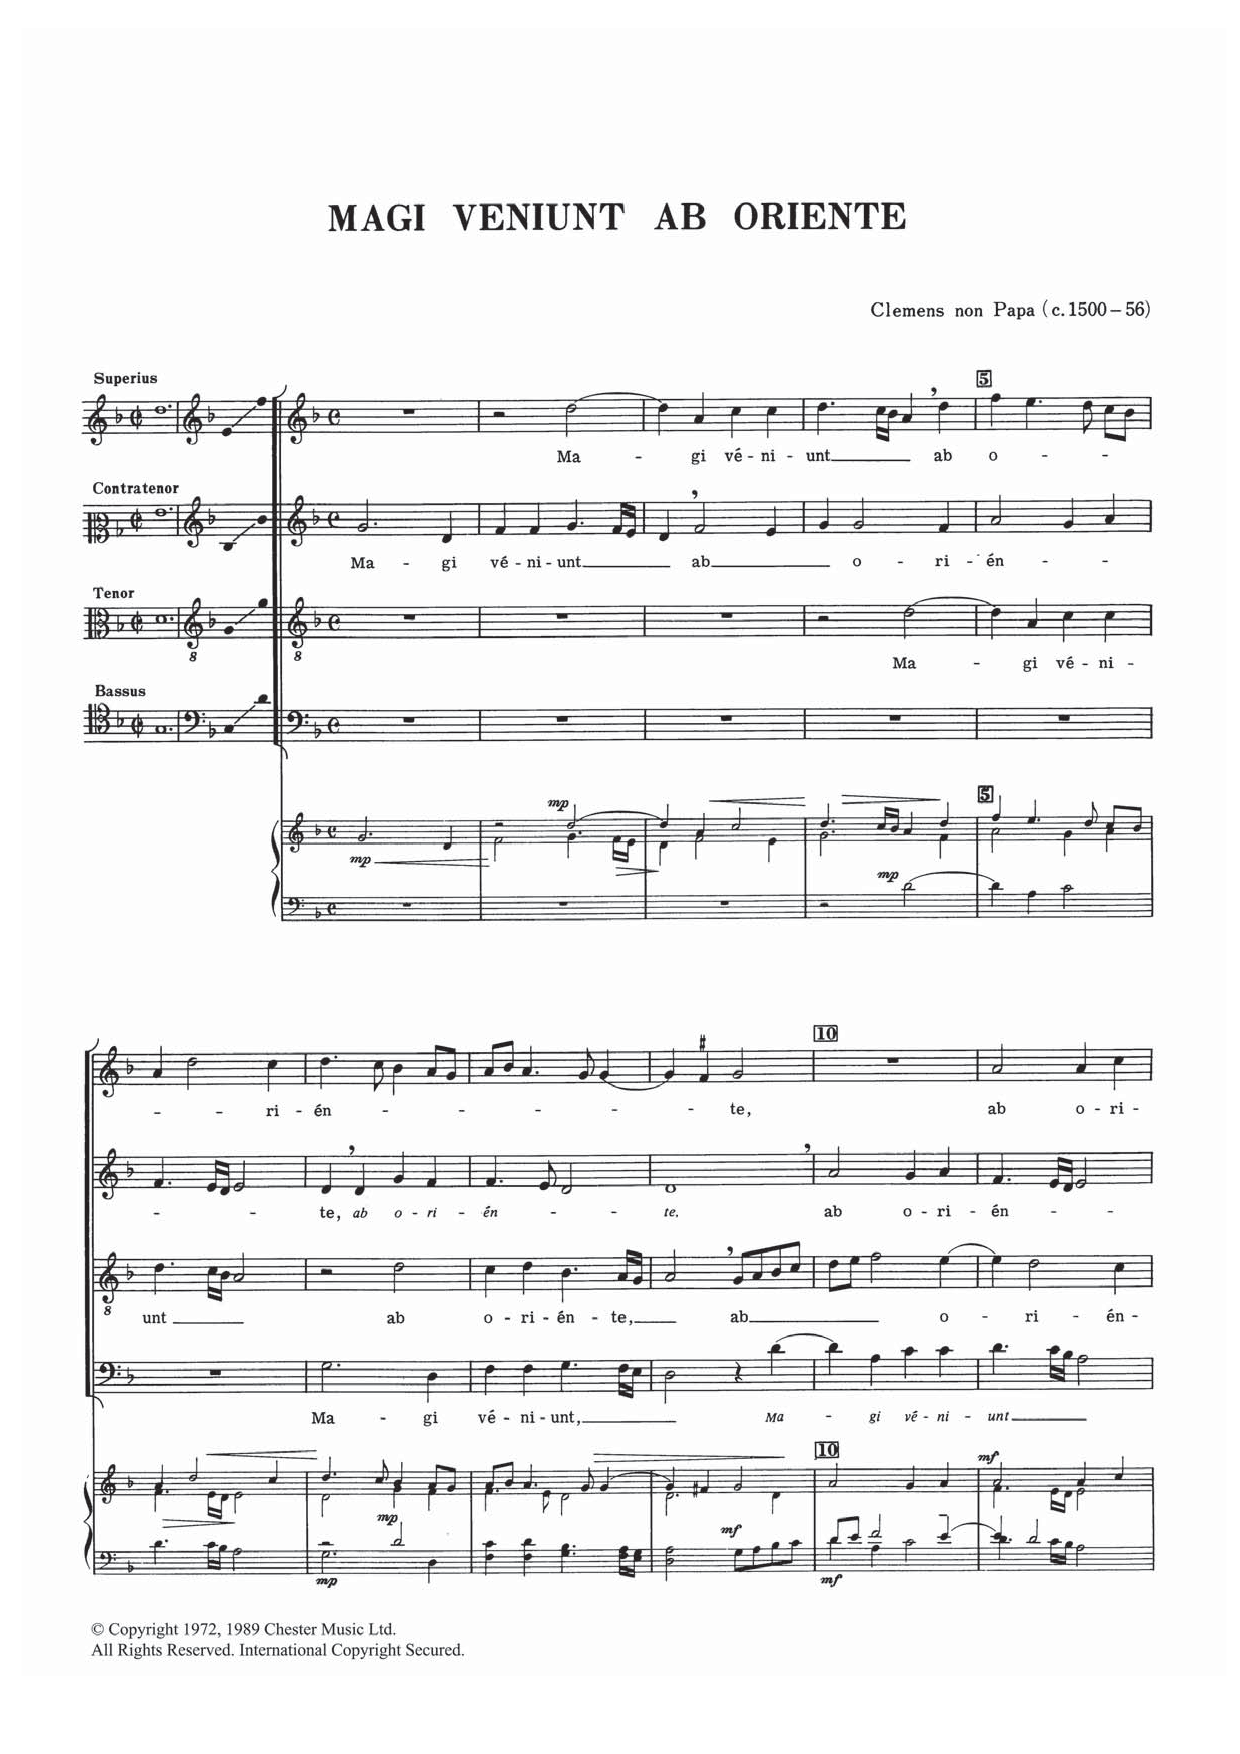 Jacob Clemens Non Papa Magi Veniunt Ab Oriente Sheet Music Notes & Chords for SATB - Download or Print PDF